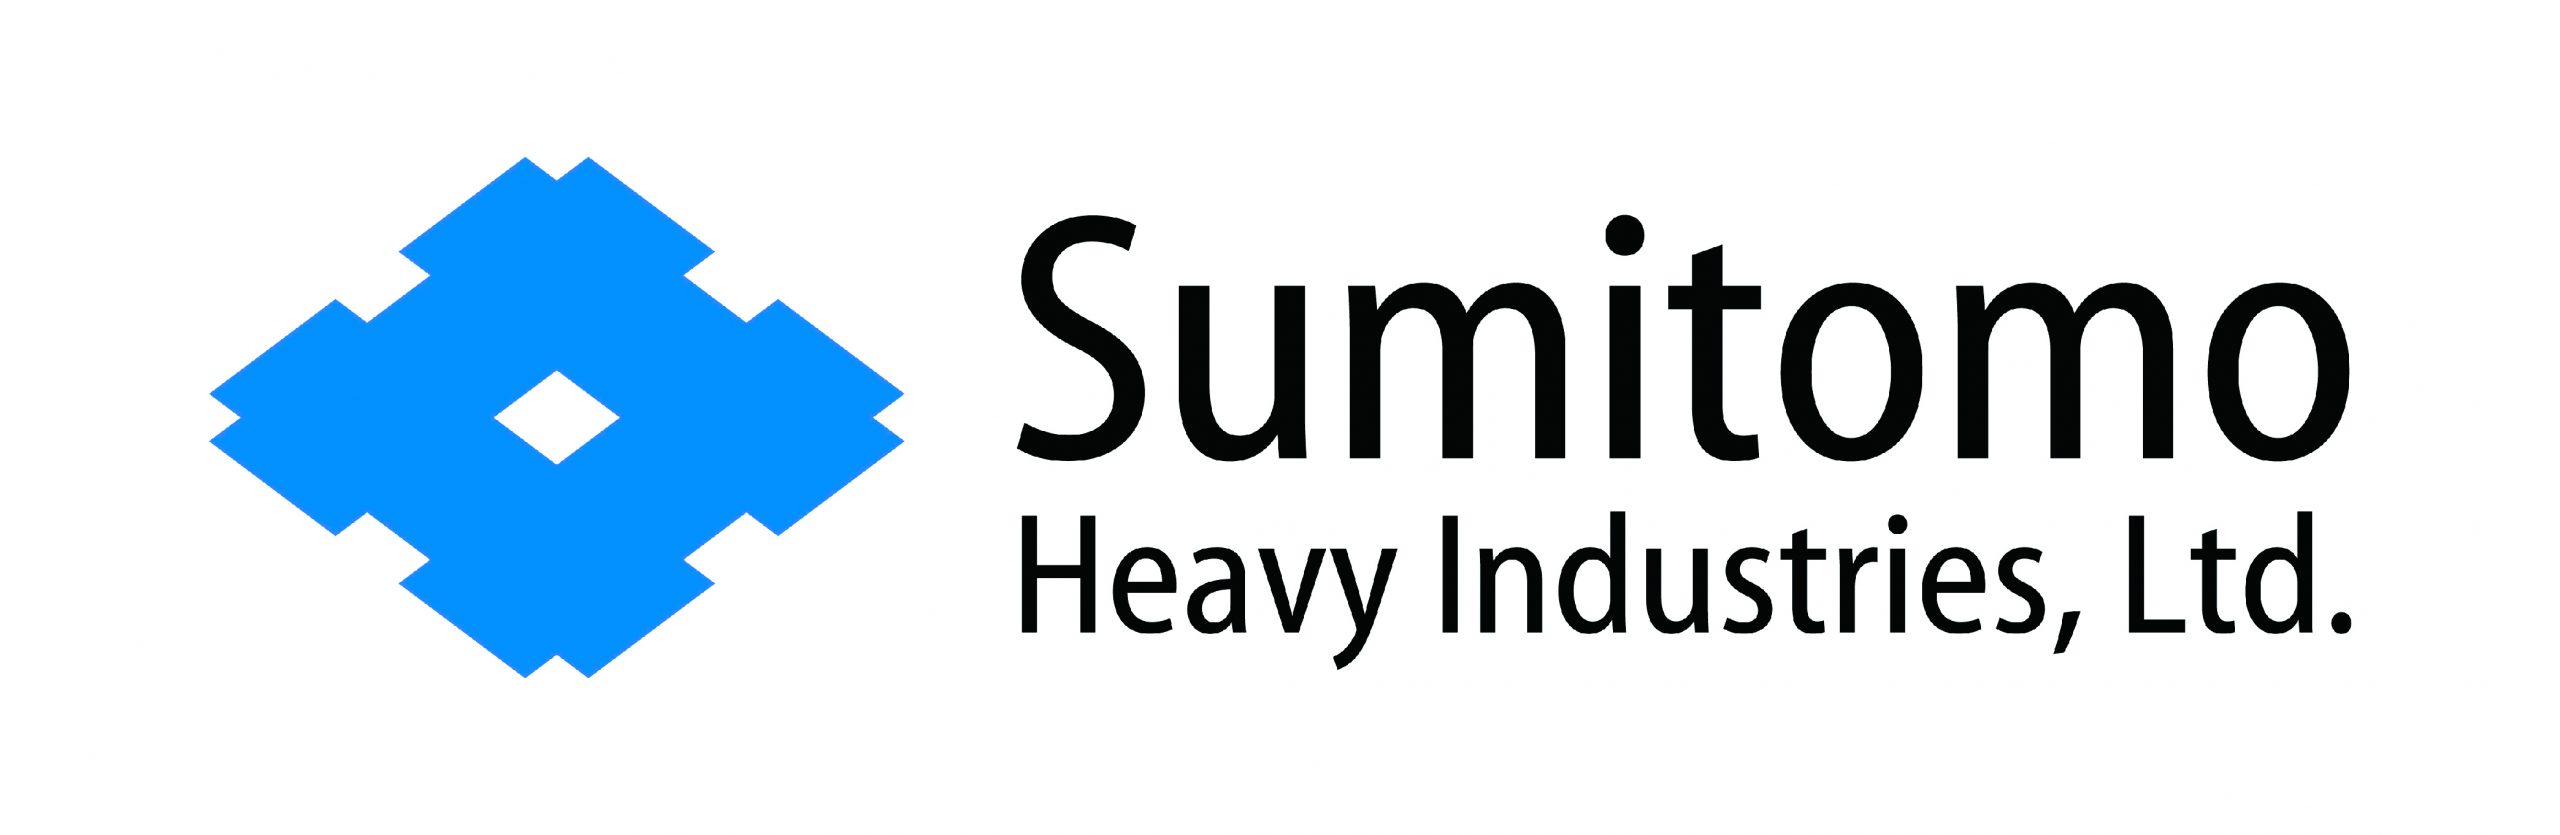 Sumitomo Heavy Industries,Ltd